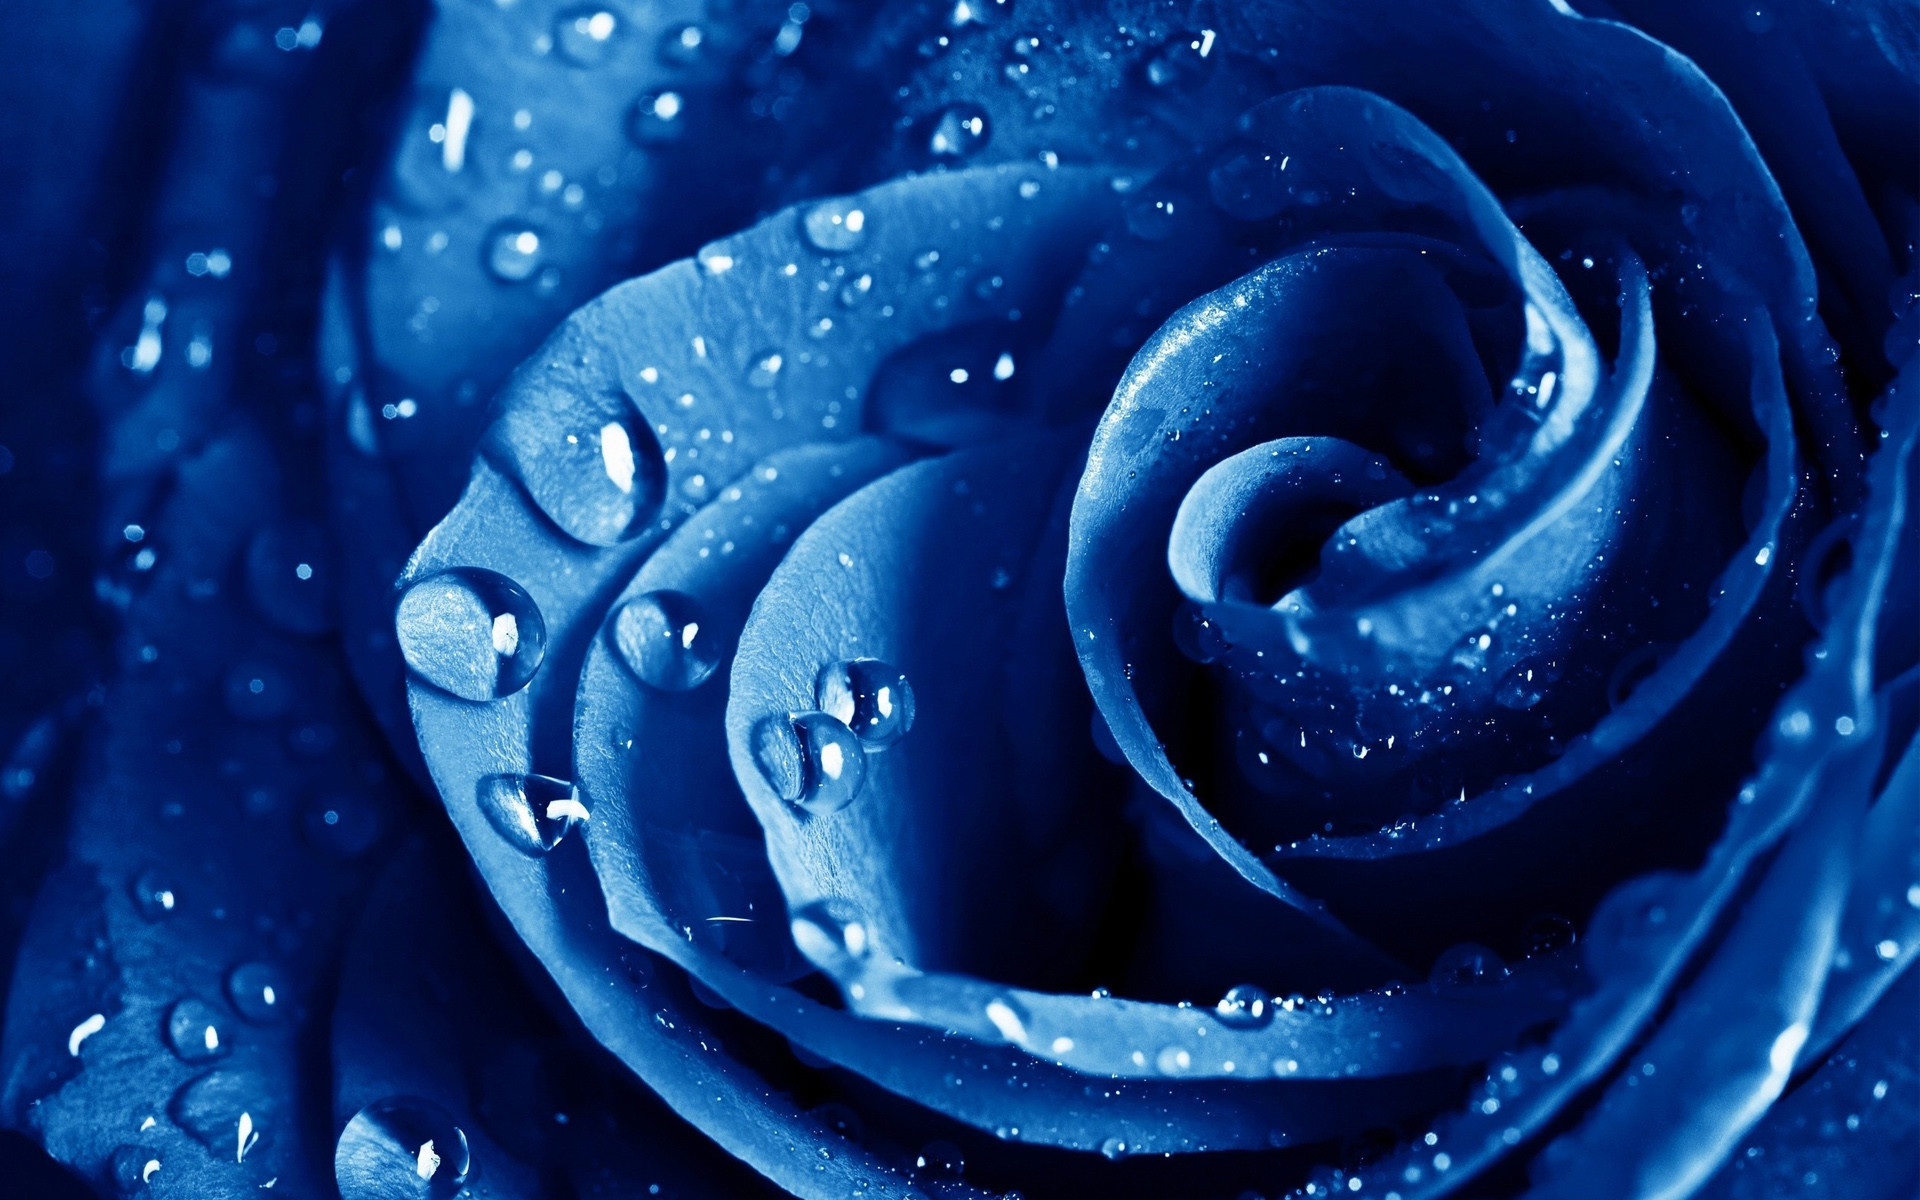 1920x1200 Blue Rose Desktop Wallpapers - Get the Newest Collection of Blue Rose Desktop  Wallpapers for your